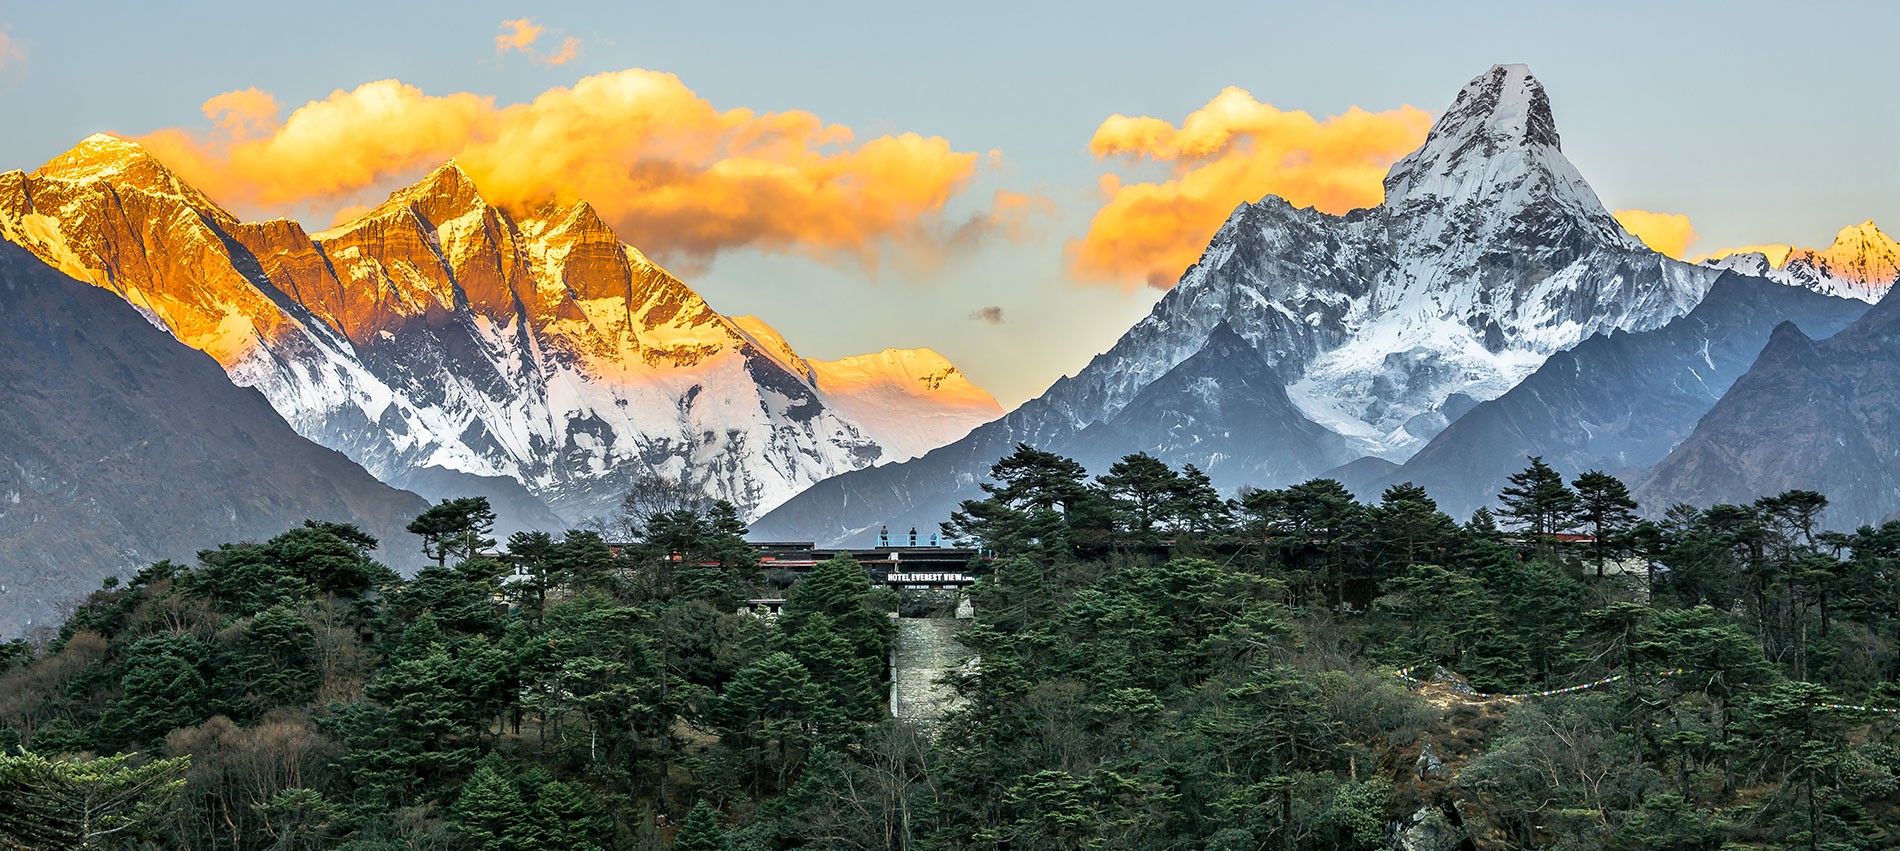 Г гималаи. Непал гора Аннапурна. Гора Манаслу Гималаи. Непал Гималаи Эверест. Непал Гималаи Аннапурна.